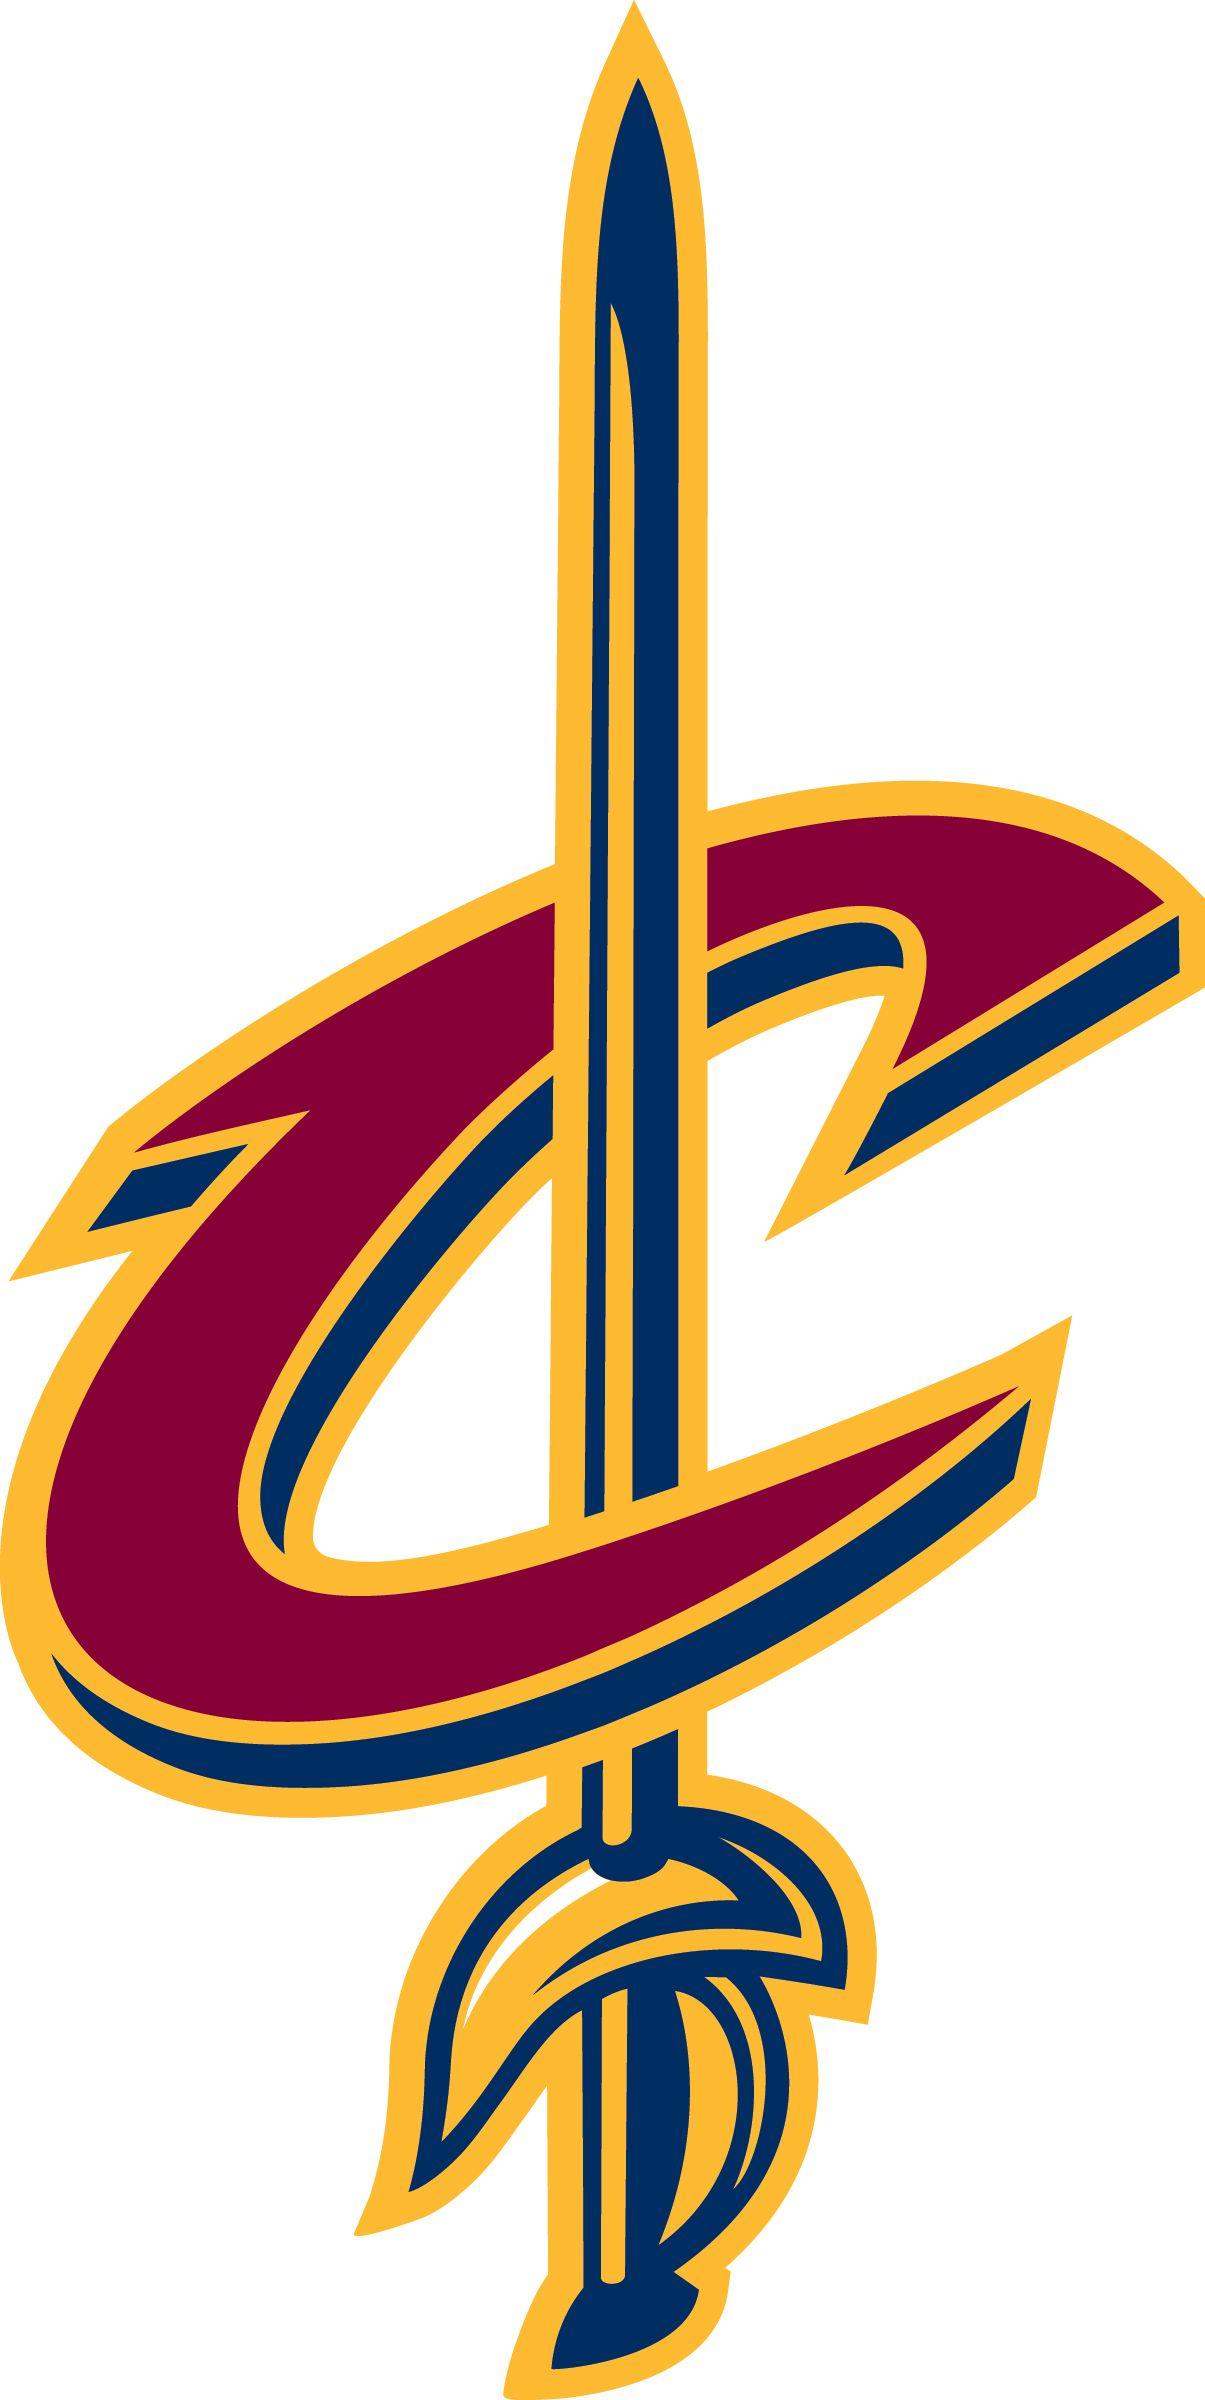 Cleveland Logo - Image result for cleveland cavaliers logo. Sports logos. Logos